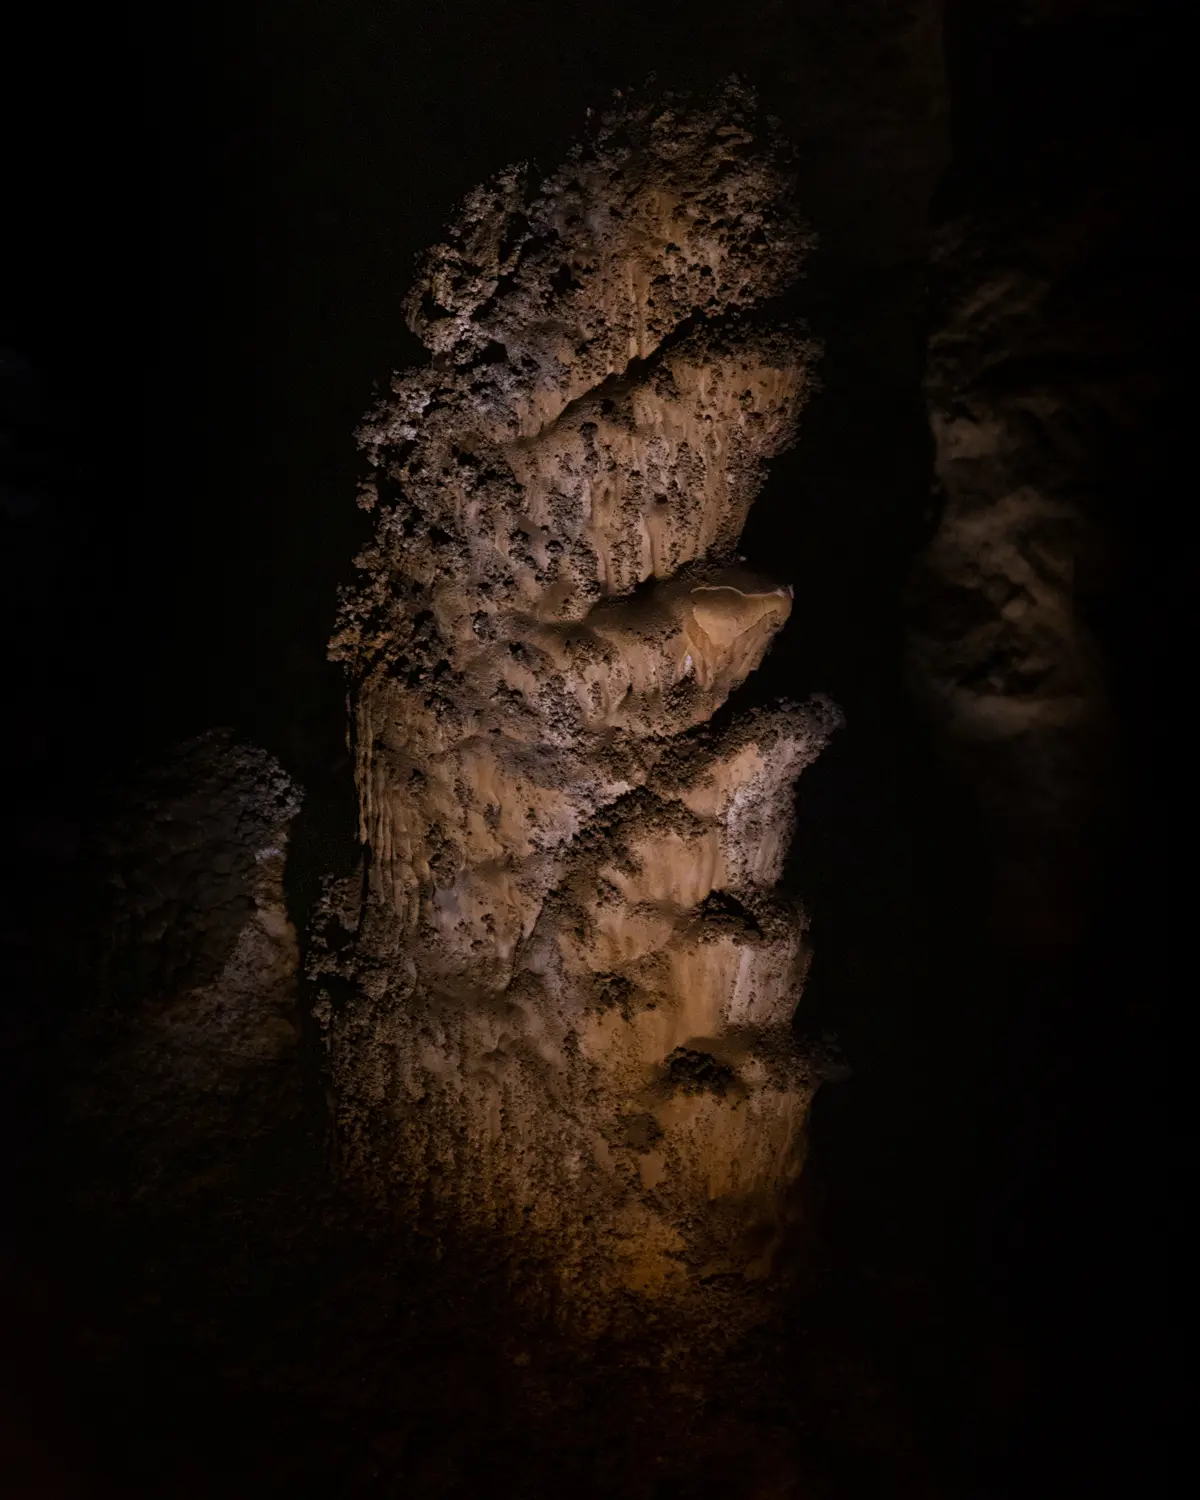 Carlsbad Caverns  
New Mexico  
October 3, 2022
---
